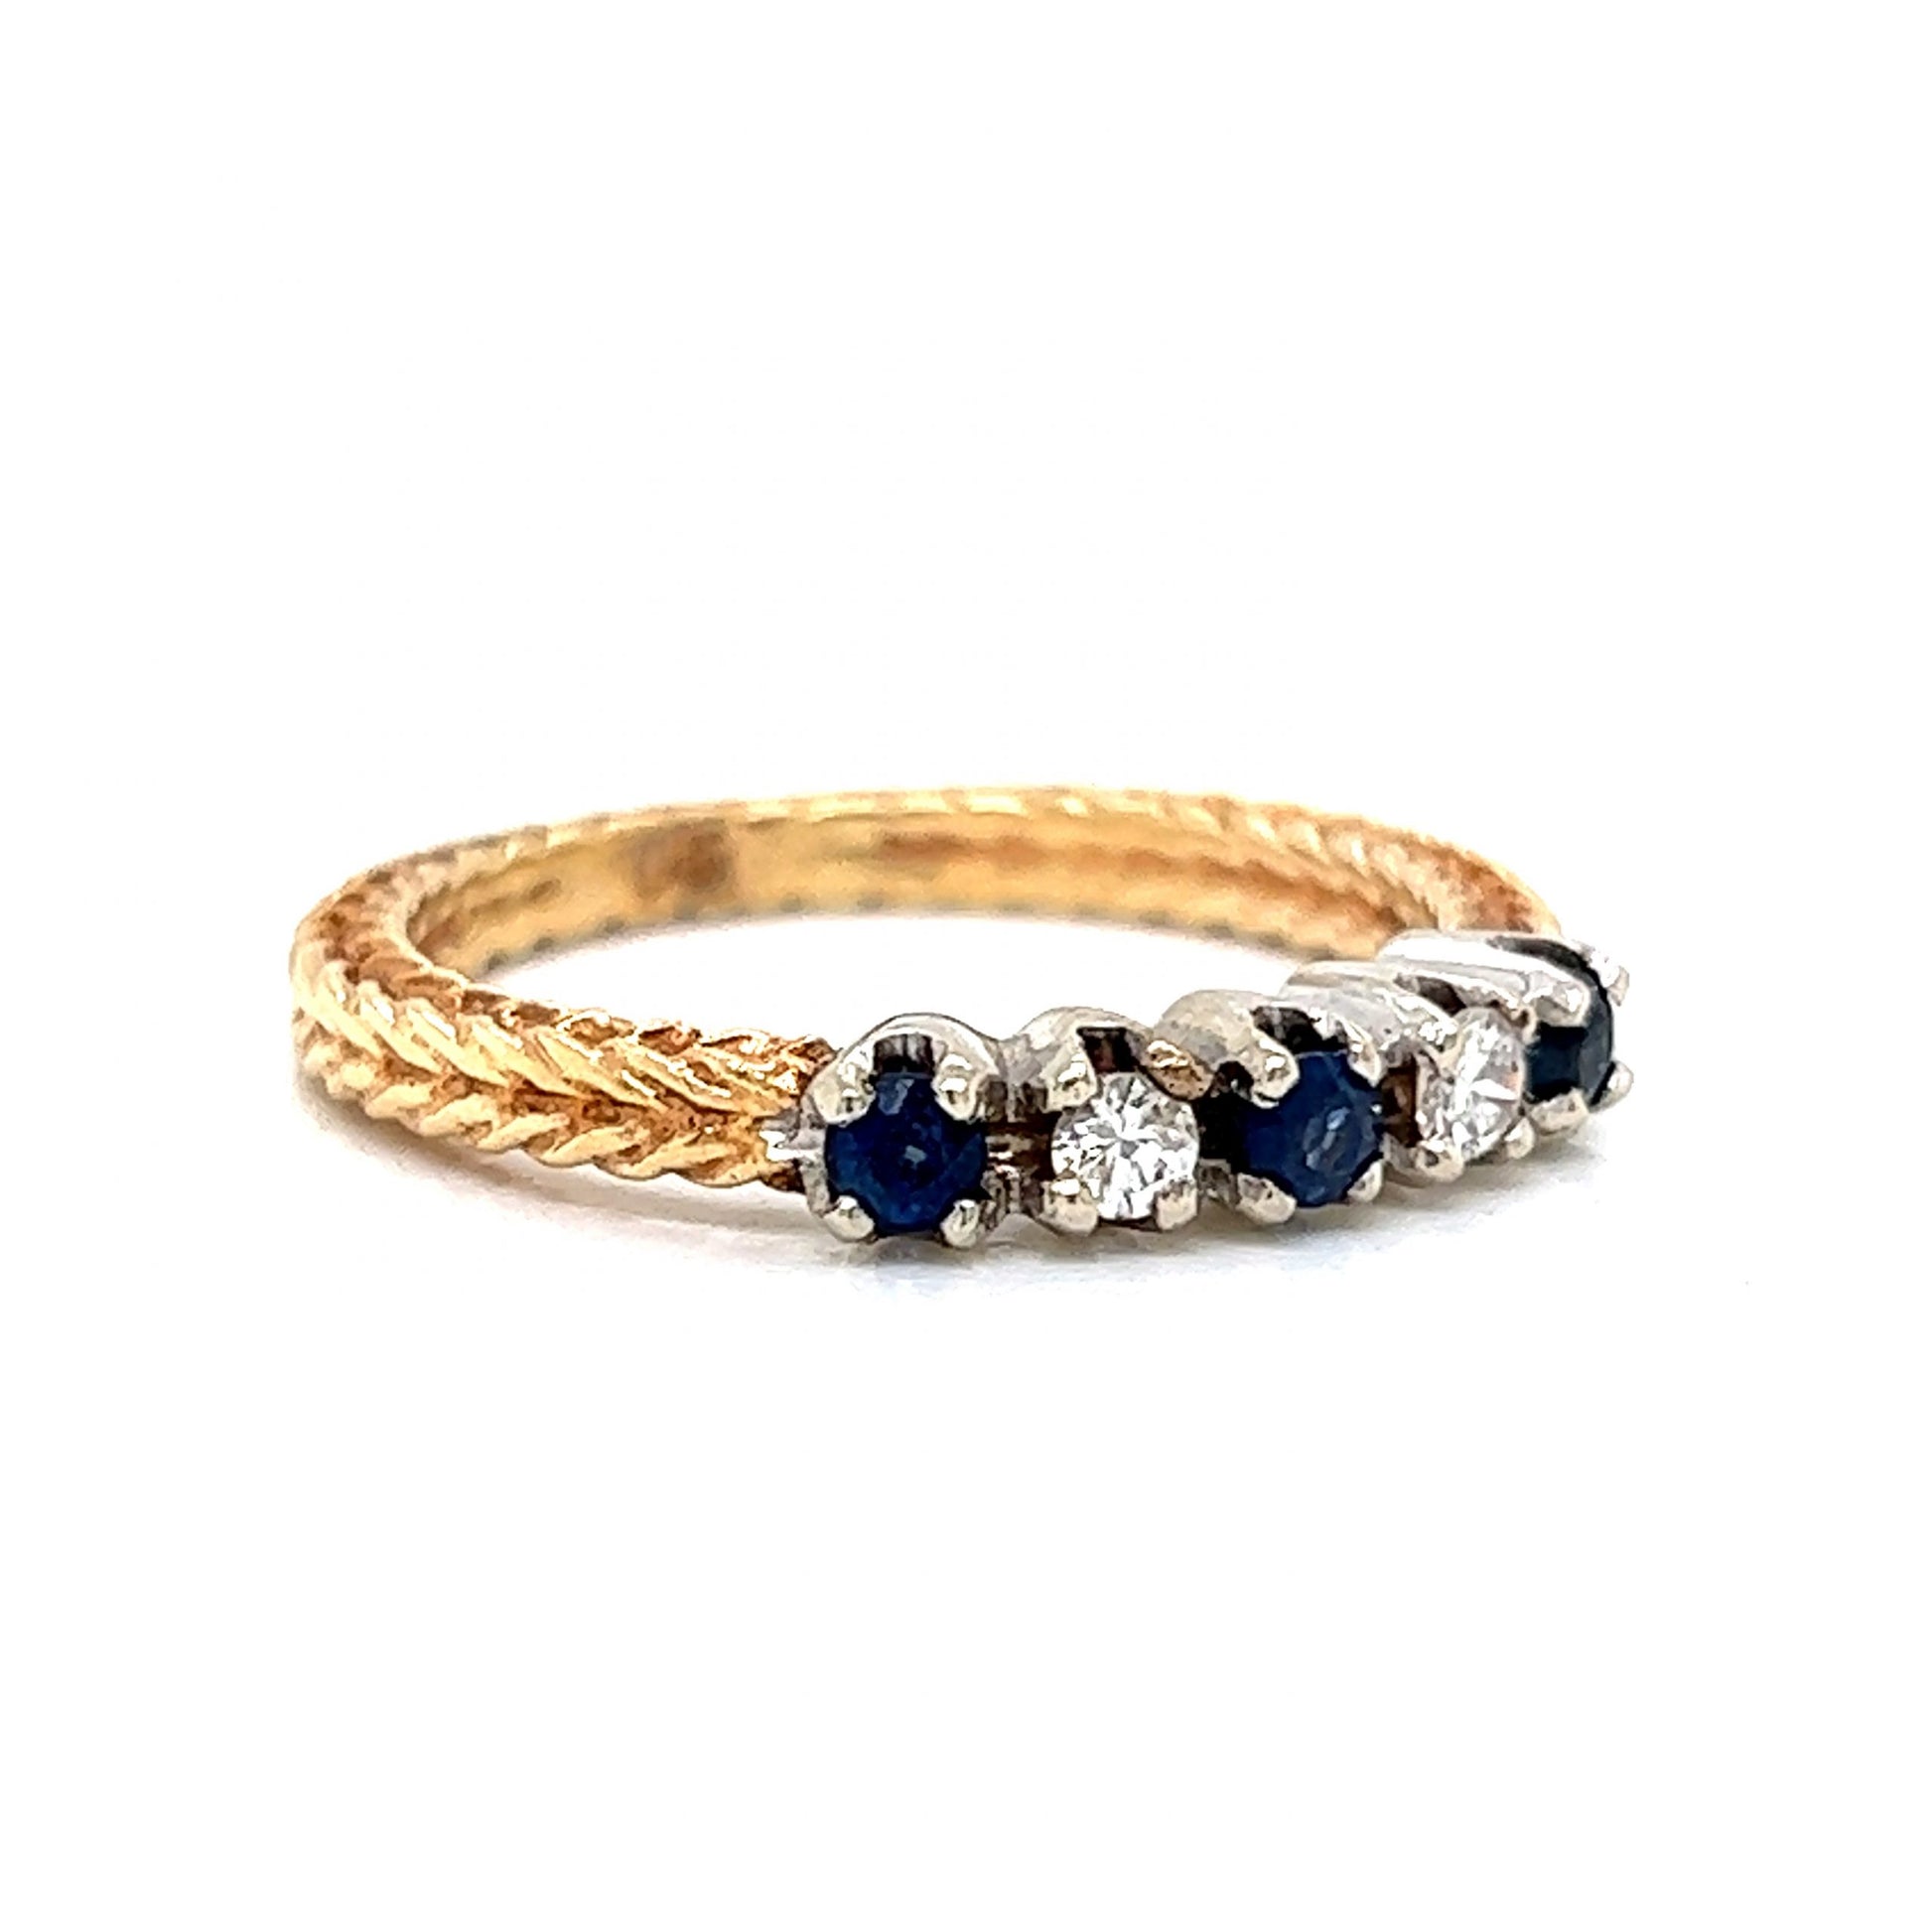 Vintage Alternating Diamond & Sapphire Ring in 14k Yellow Gold